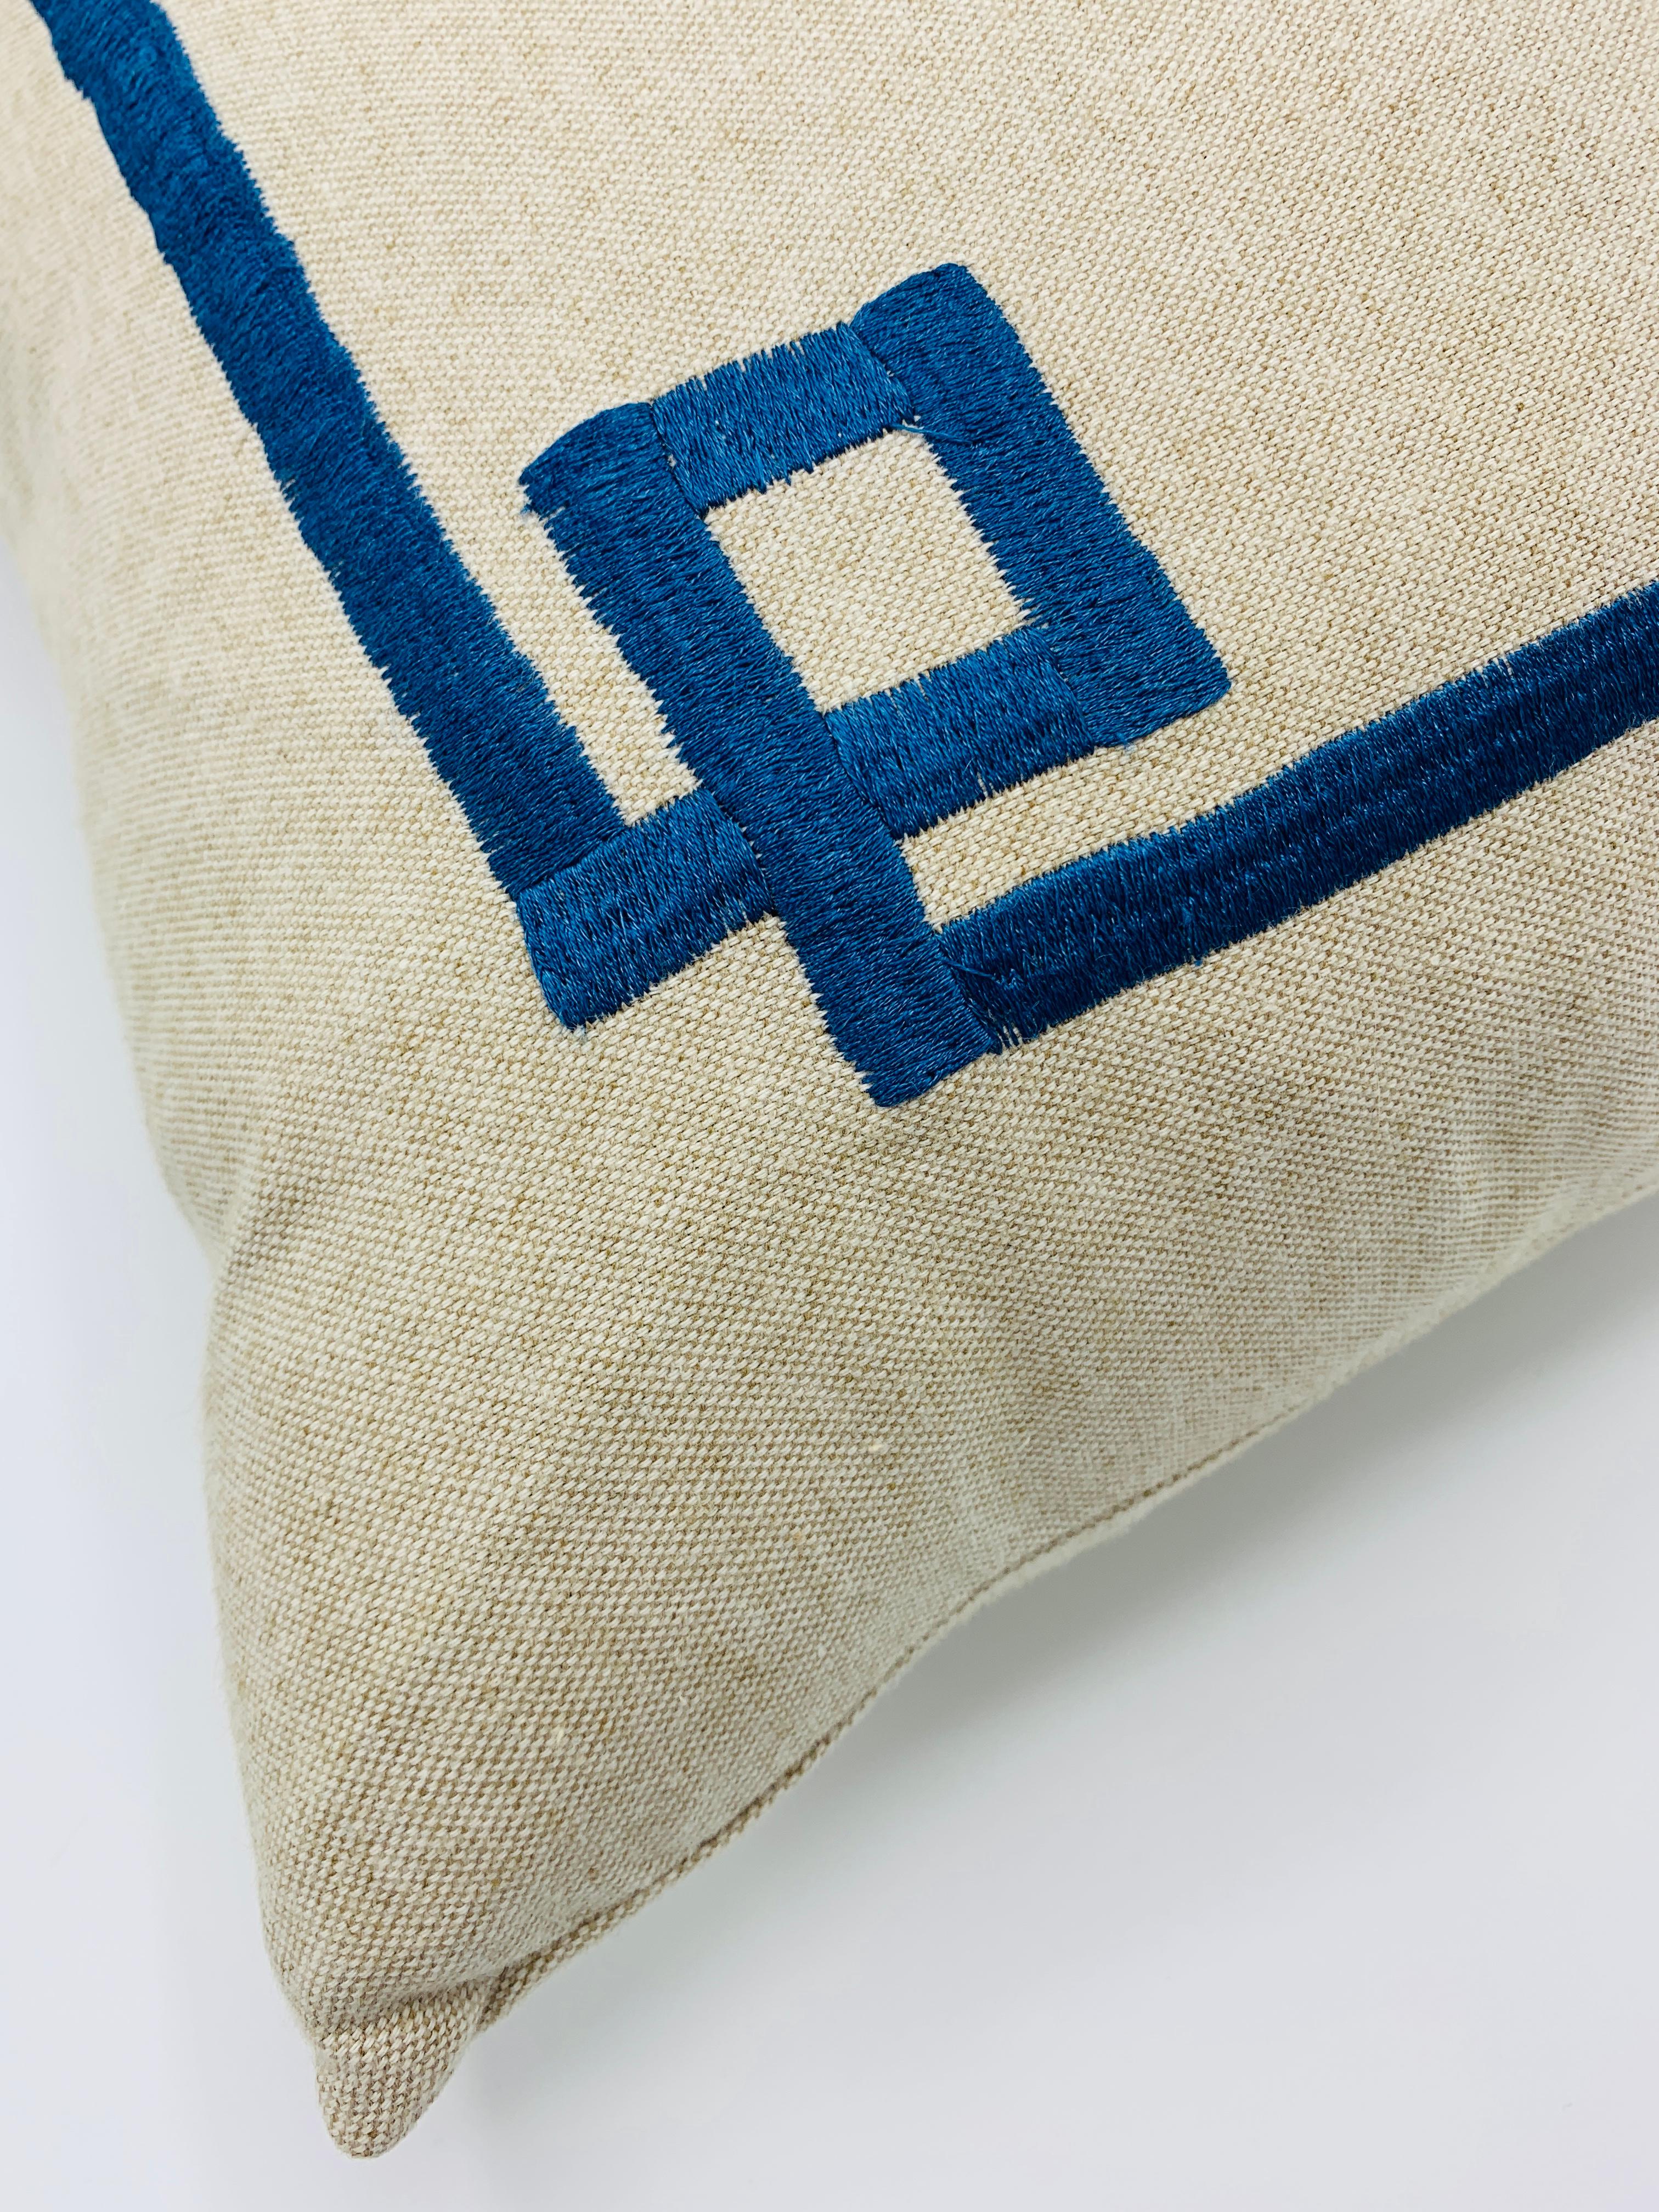 Blue Pagoda Embroidery on Linen Pillow, Custom 3